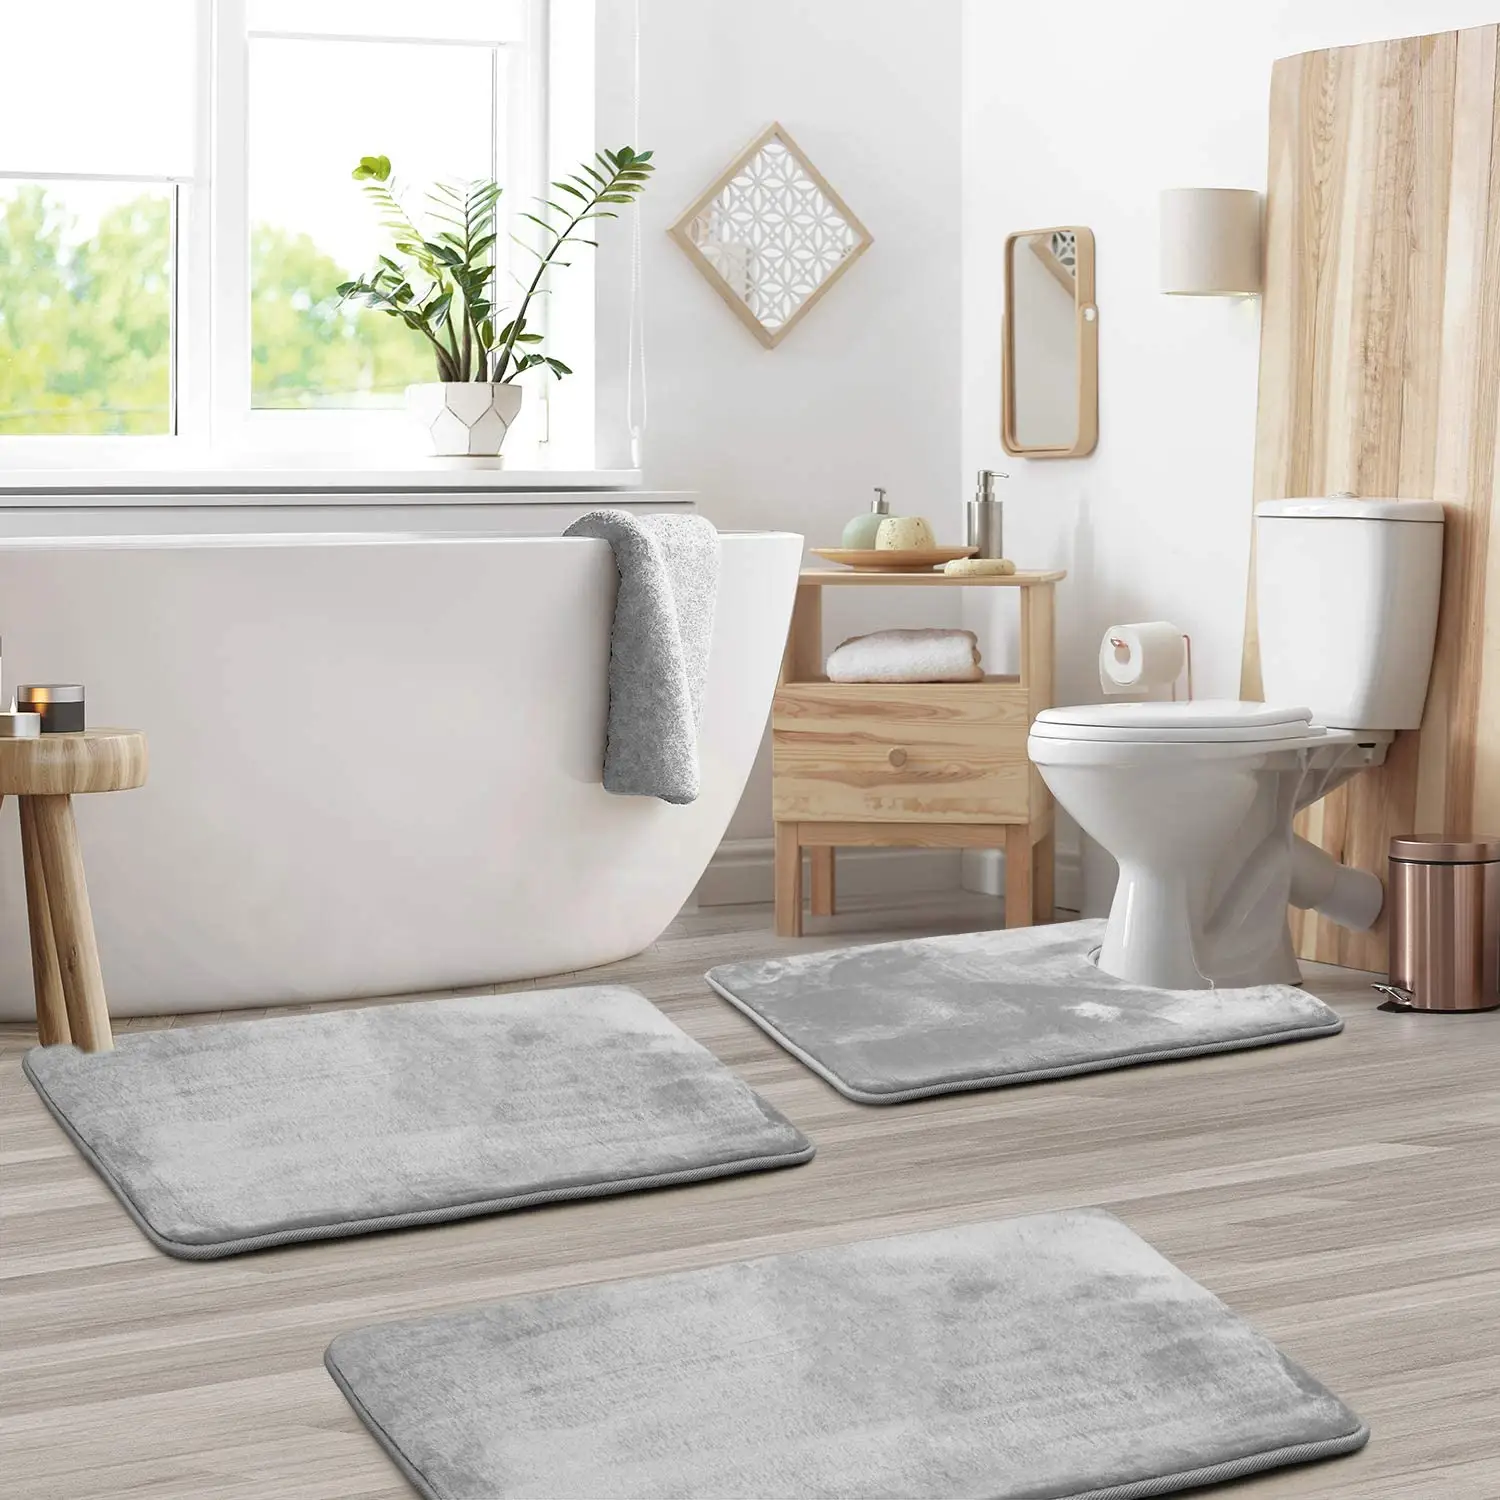 3 Pieces Non Slip Absorbent Velvet Fast Drying Bath Mats Bathroom Rugs Memory Foam Bath Mat Set for Bathroom